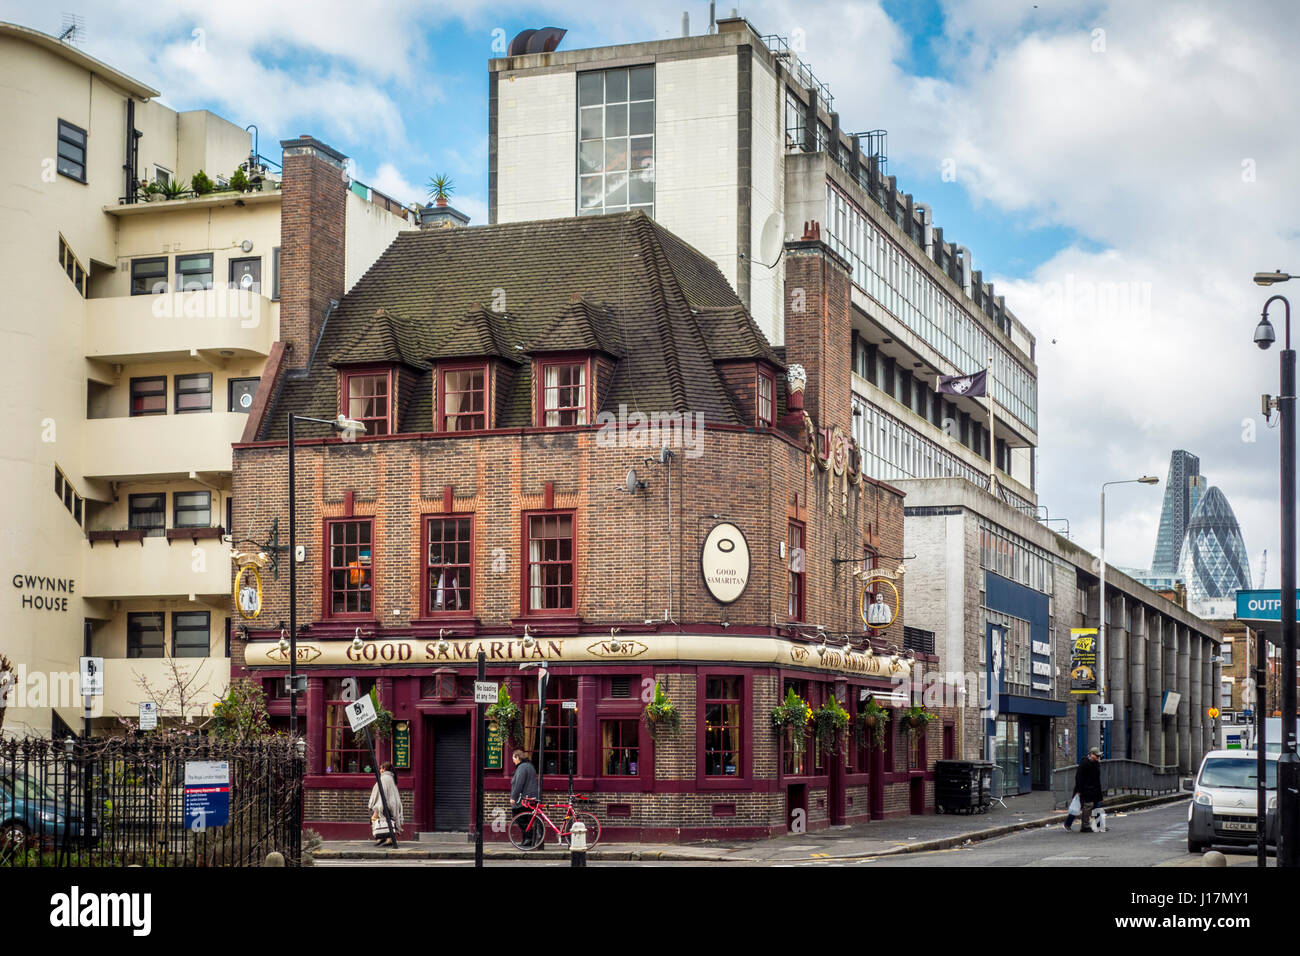 Good Samaritan pub public house, Turner Street, Whitechapel, London, UK Stock Photo